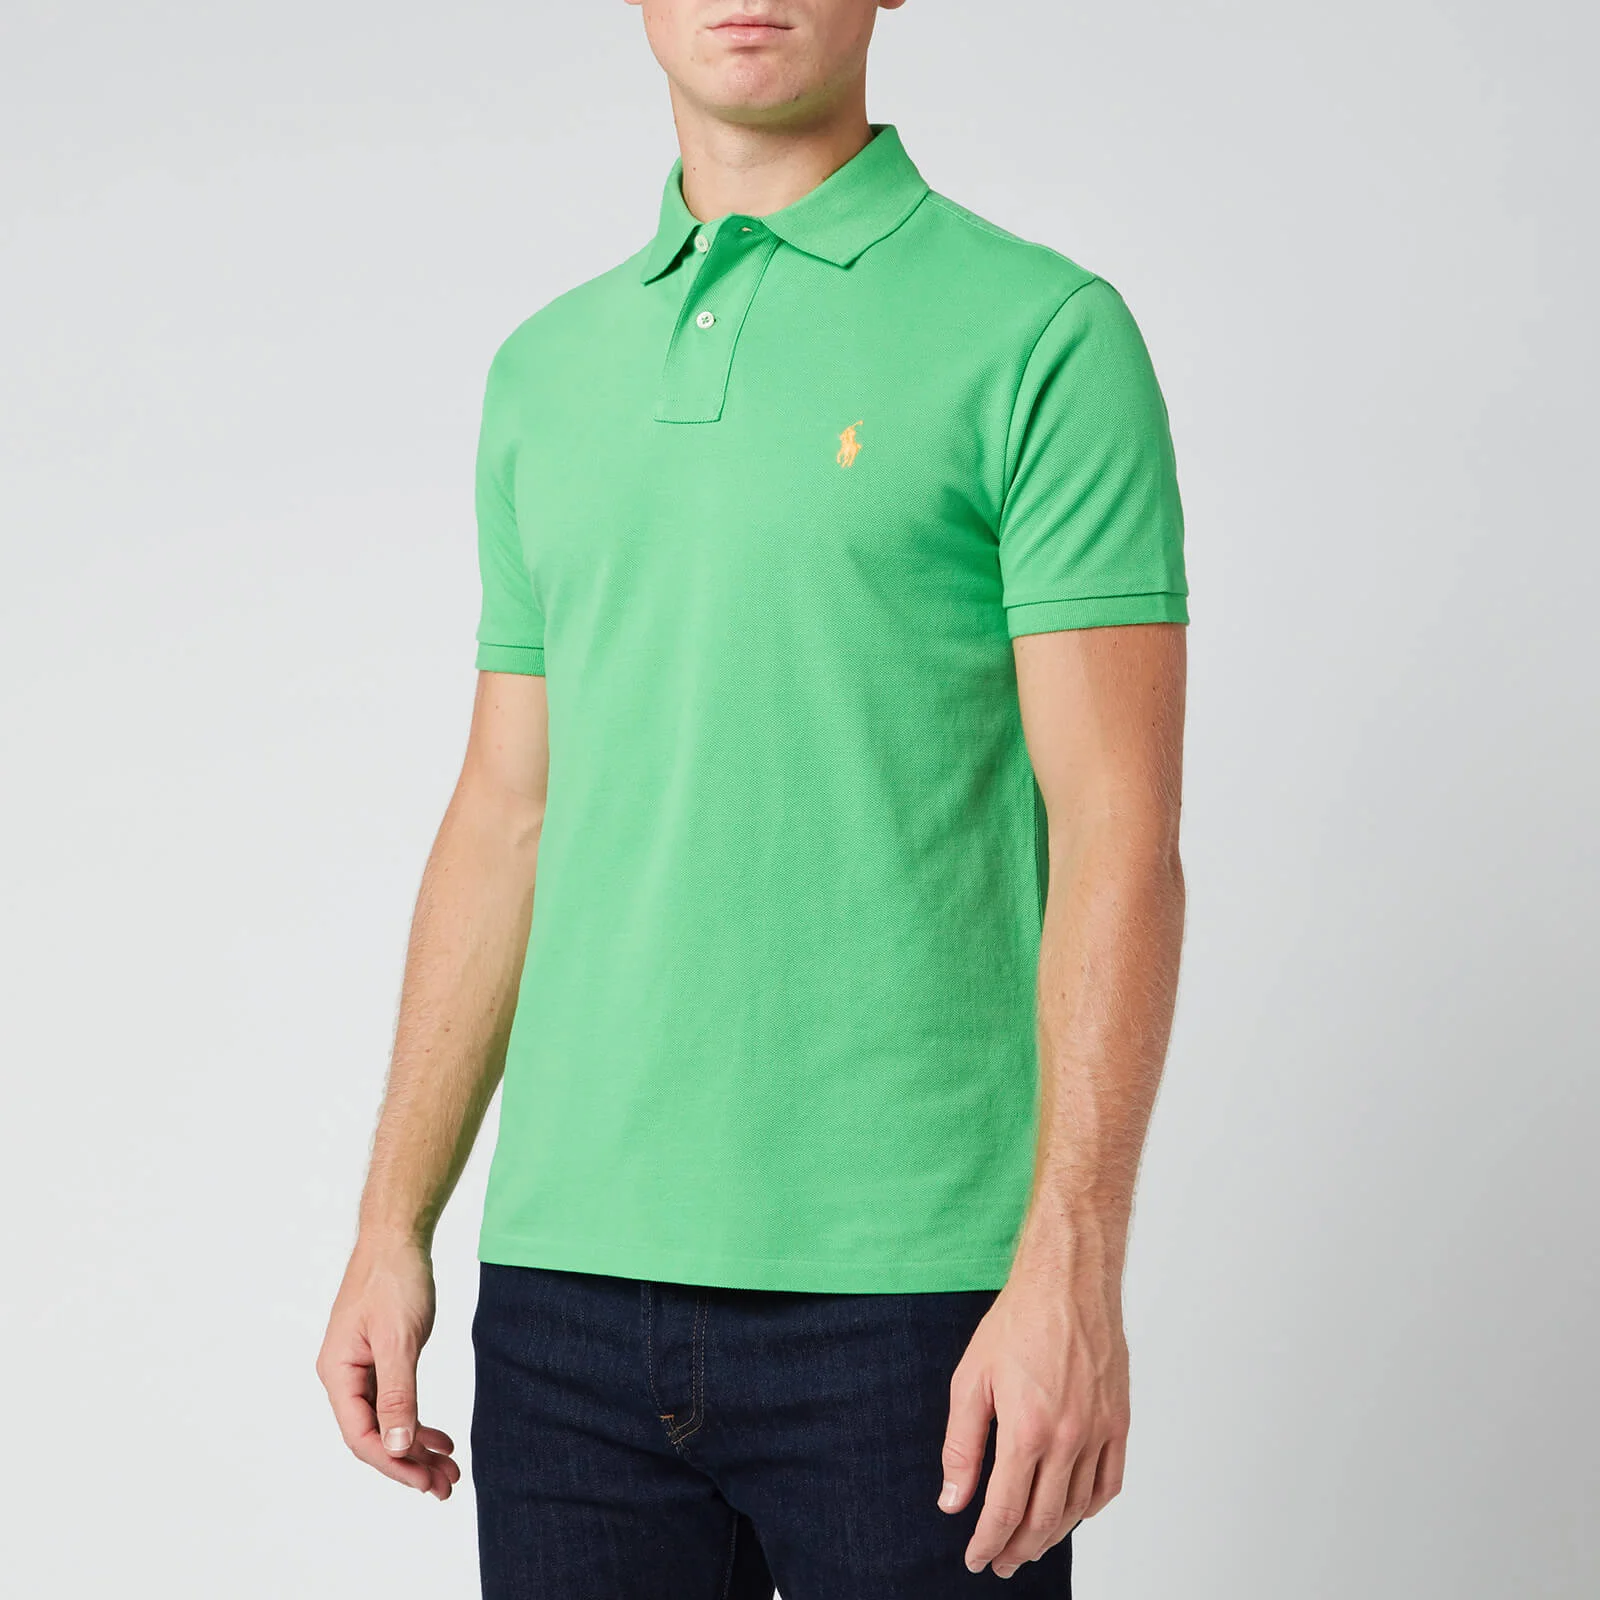 Polo Ralph Lauren Men's Slim Fit Mesh Polo Shirt - Neon Green Image 1